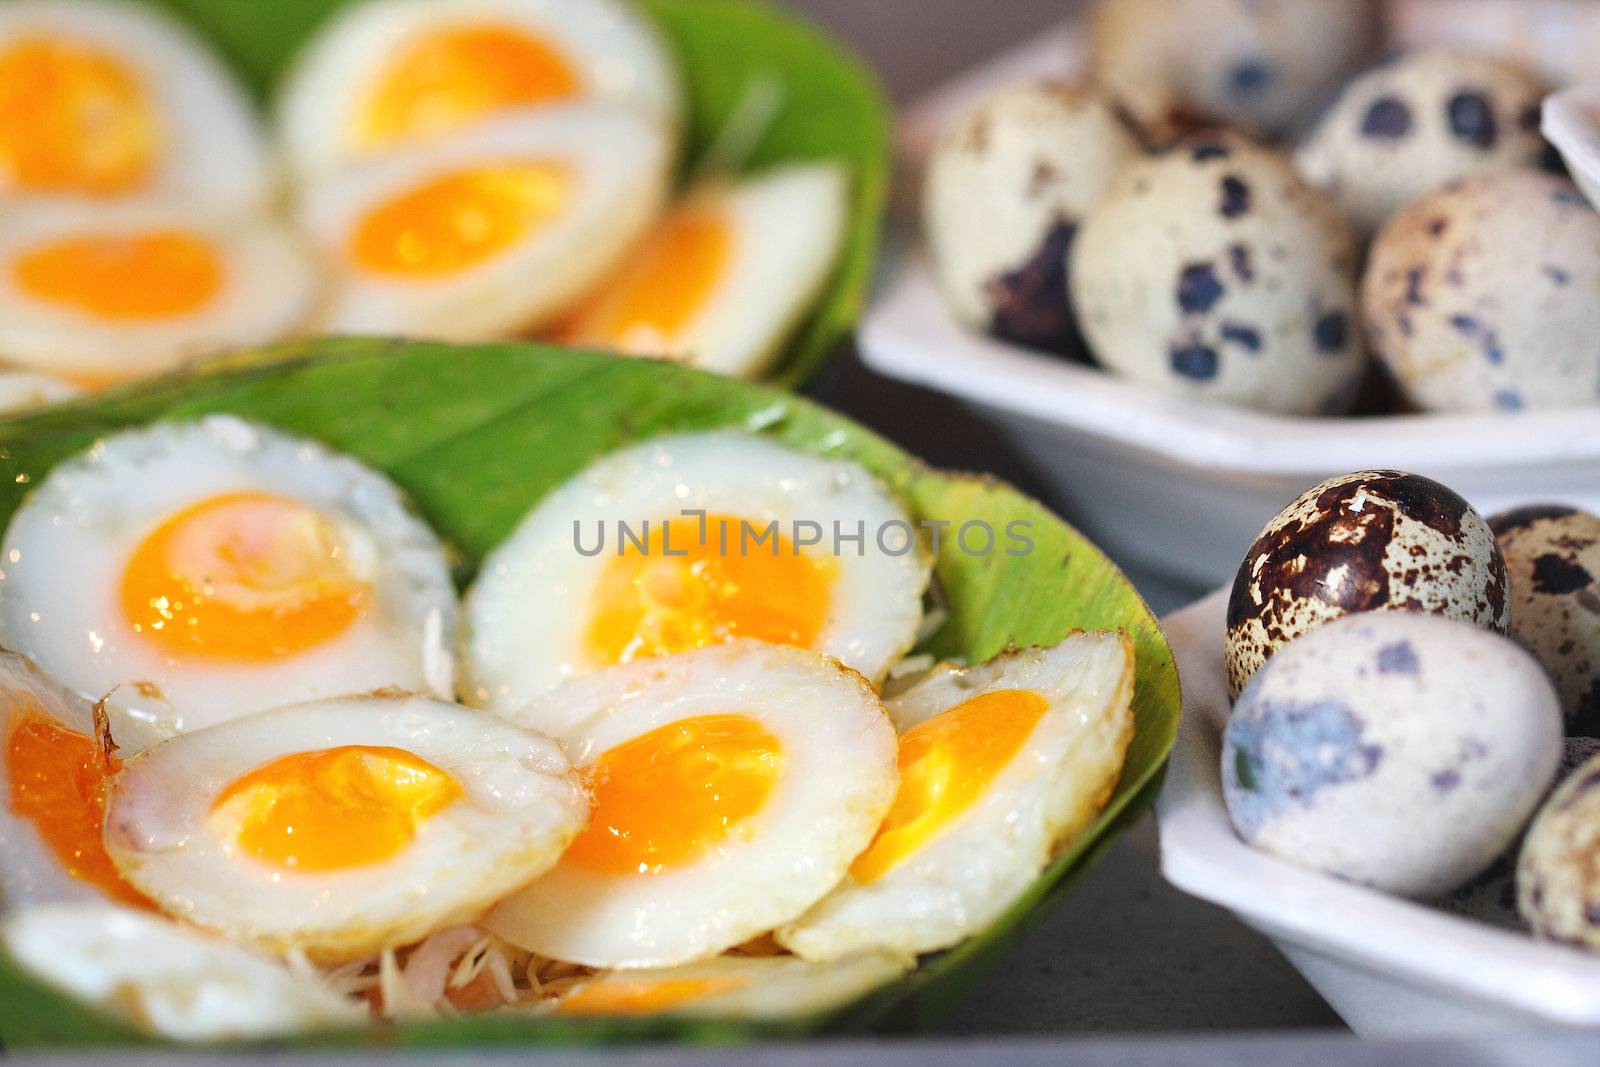 Fried quail eggs for sale